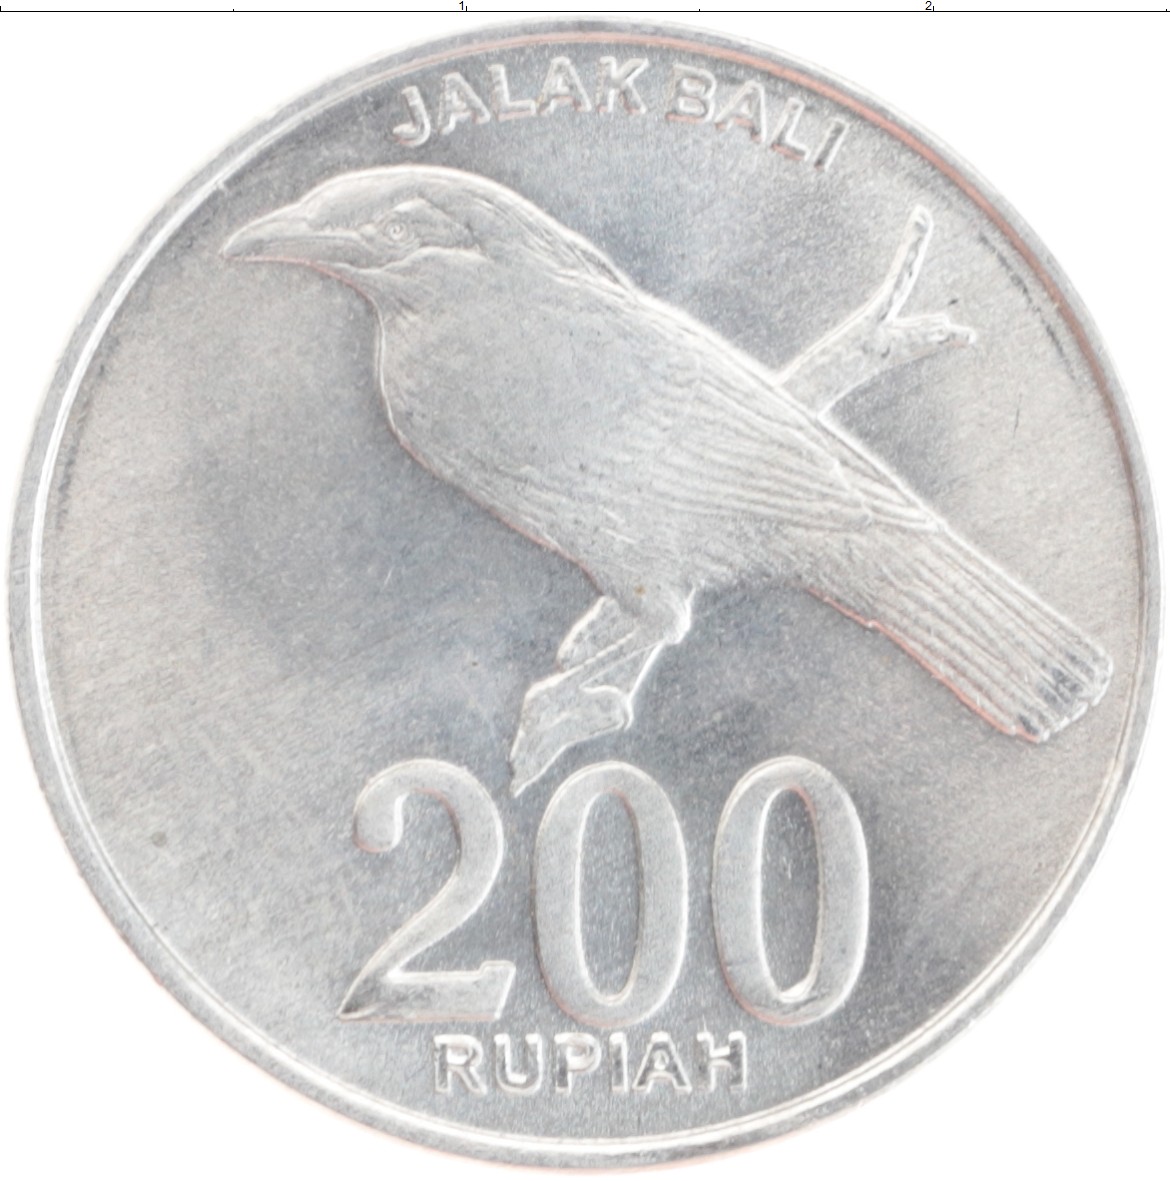 Idr в рублях. 200 Рупий монета. Монеты 2003. 1 IDR В руб. 100 000 Индонезийских рупий в рублях.